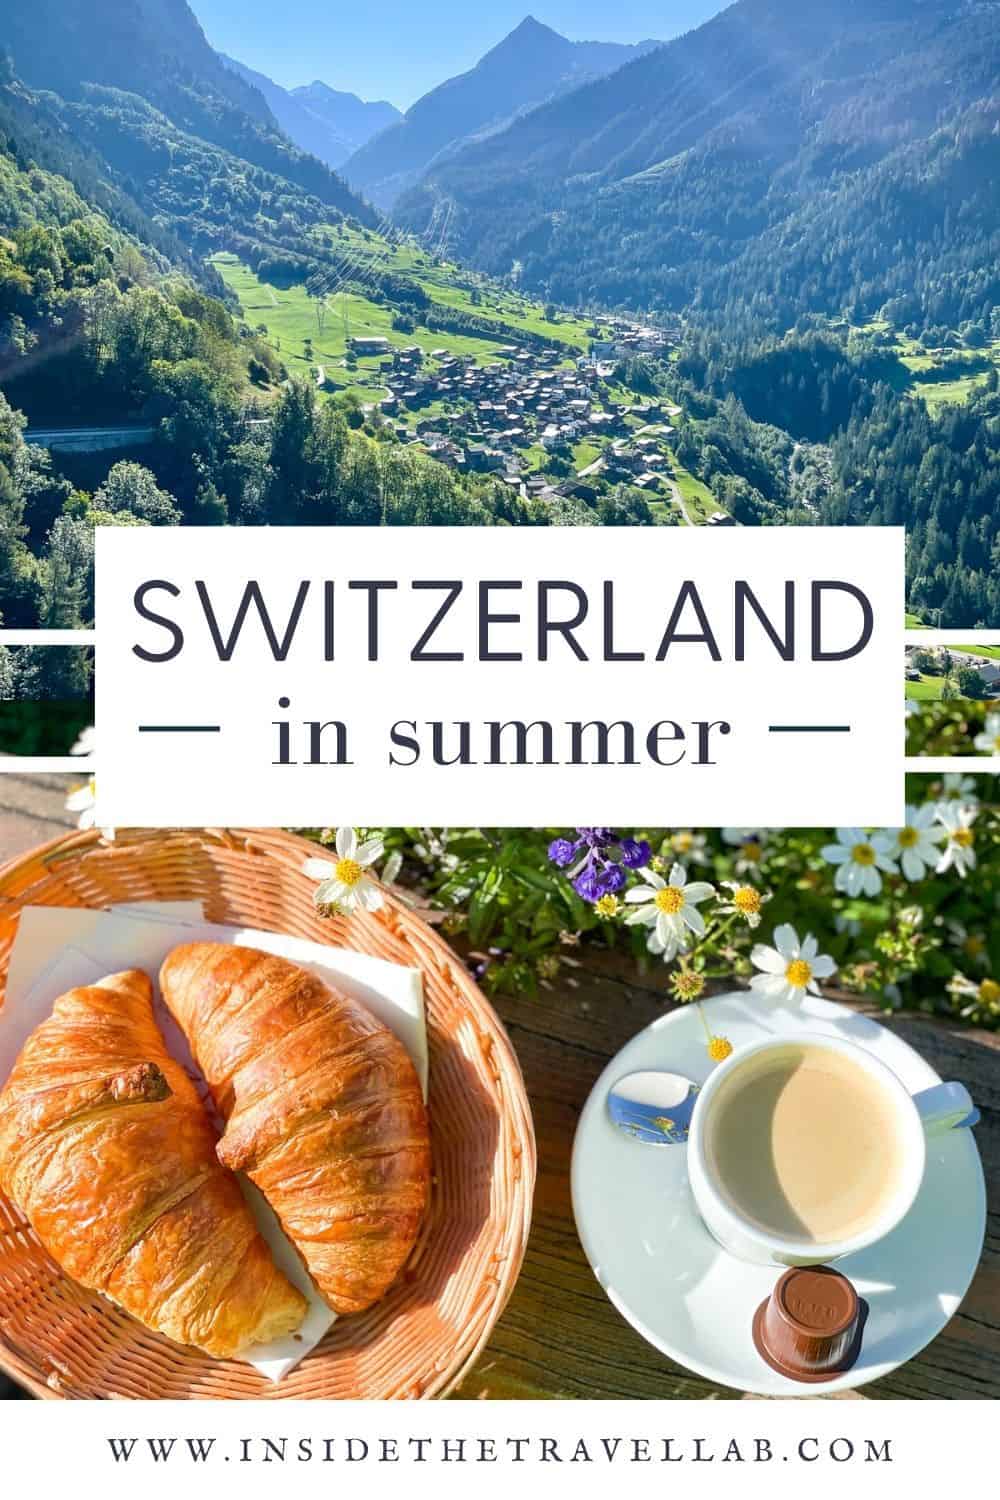 Switzerland in summer cover image